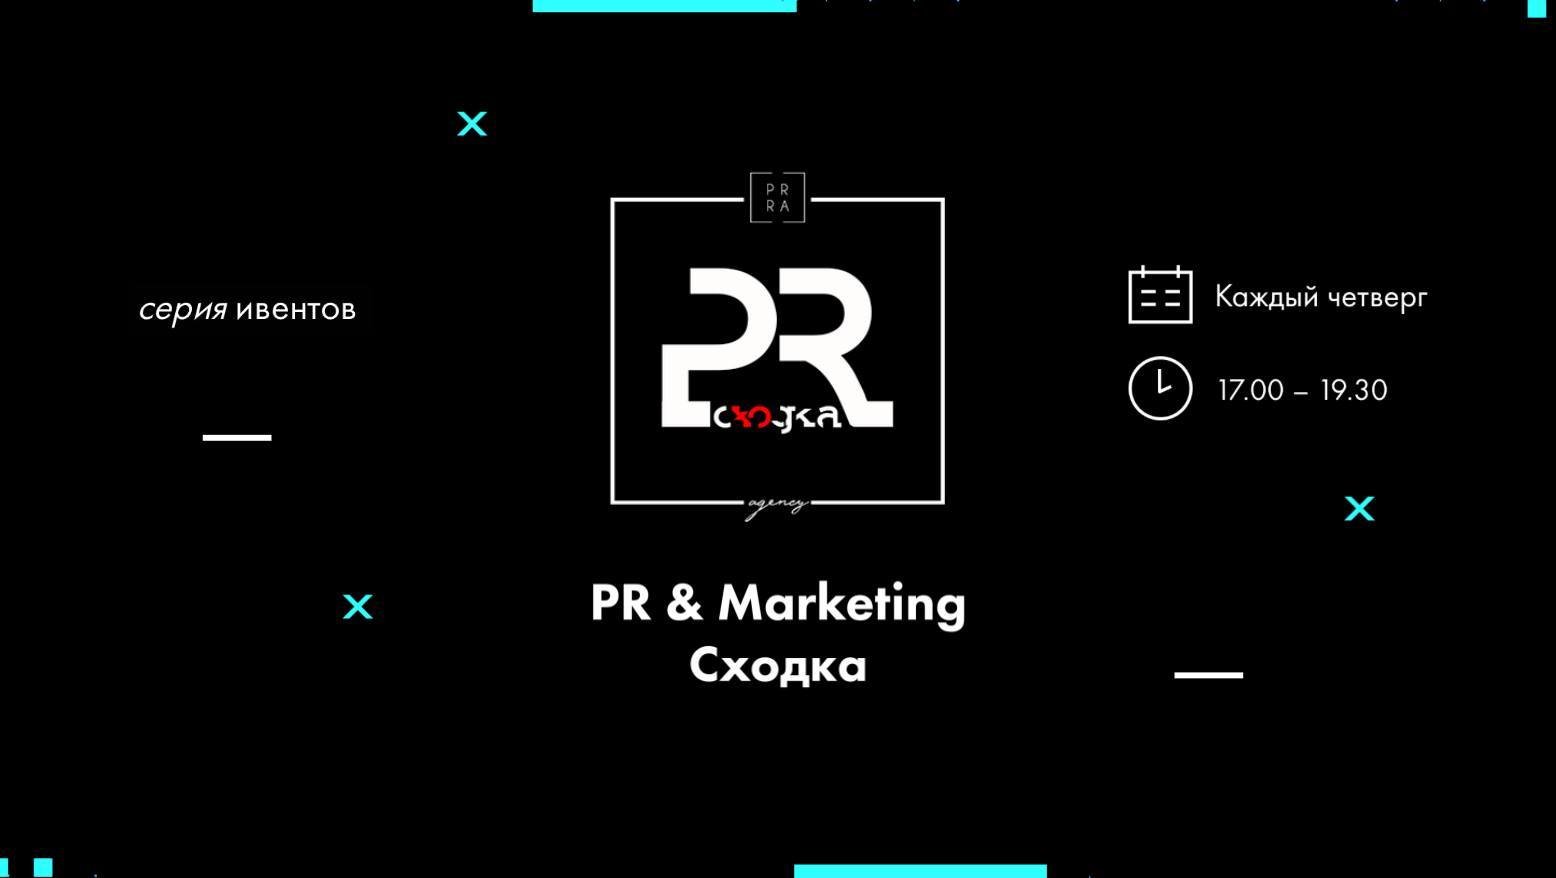 "PR & Marketing: сходка"